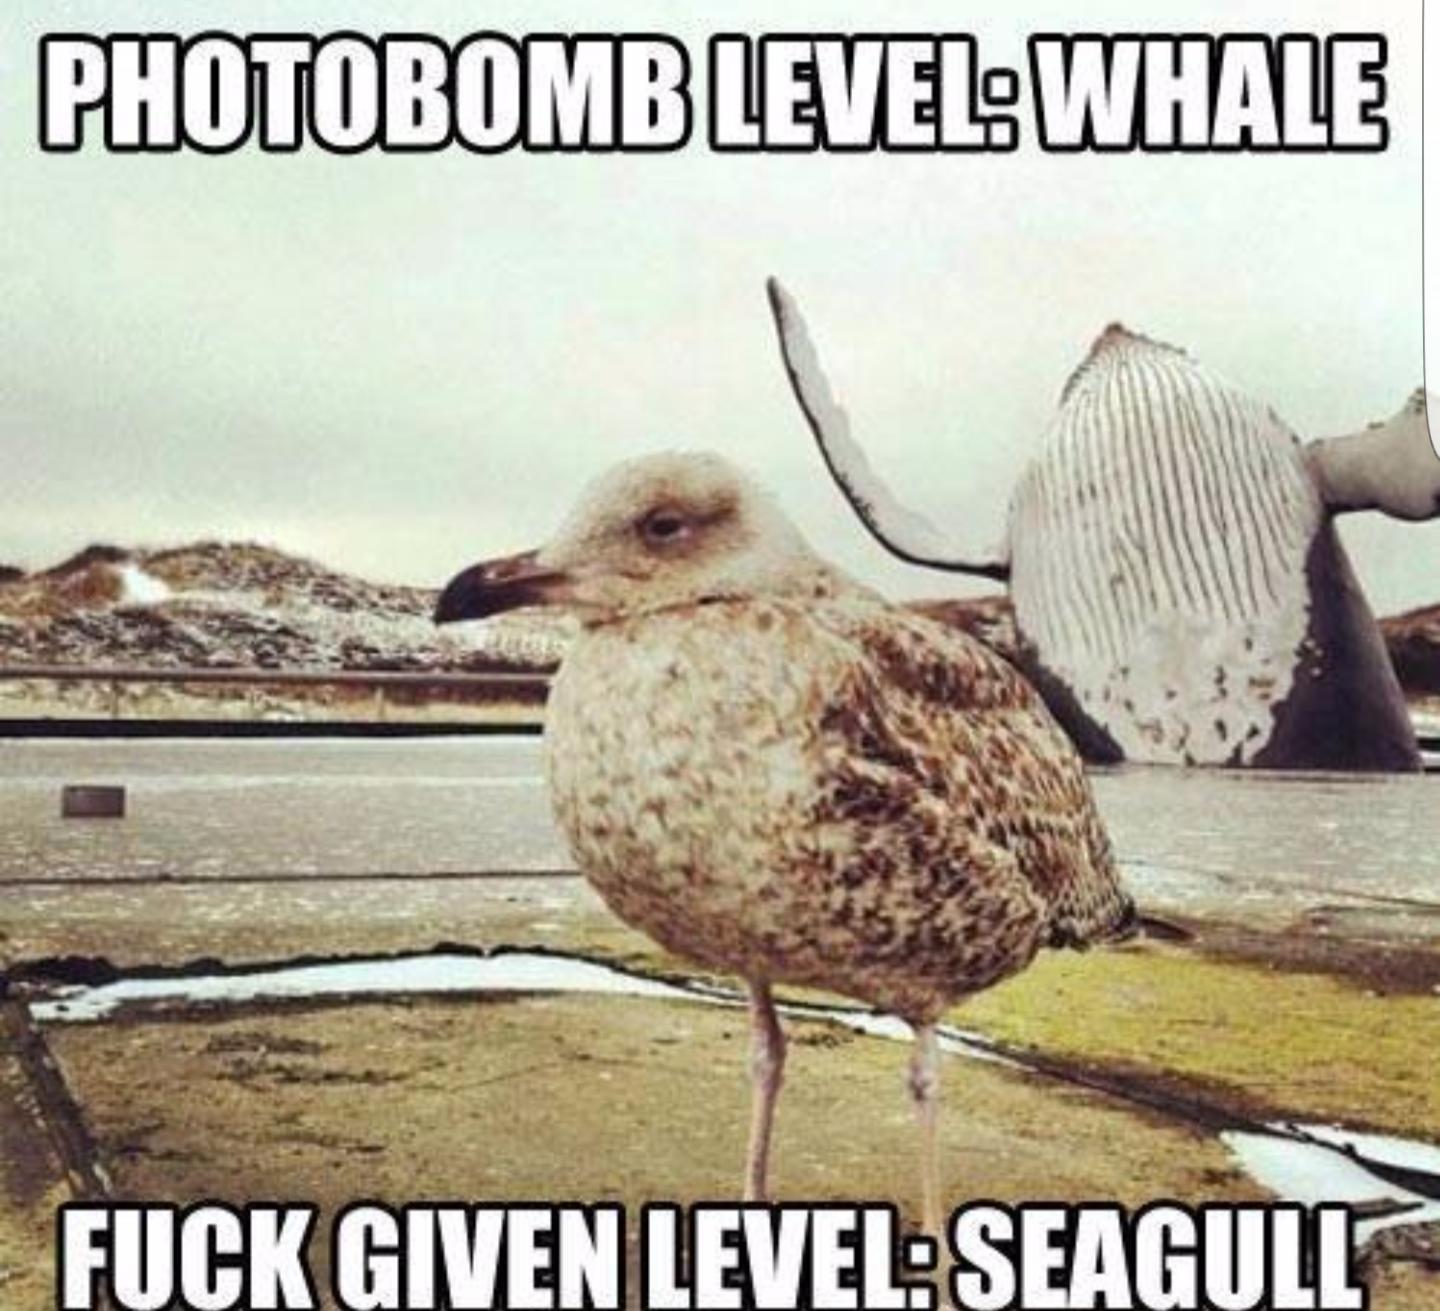 memes - széchenyi chain bridge - Photobomb Level Whale Fuck Given LevelSeagull